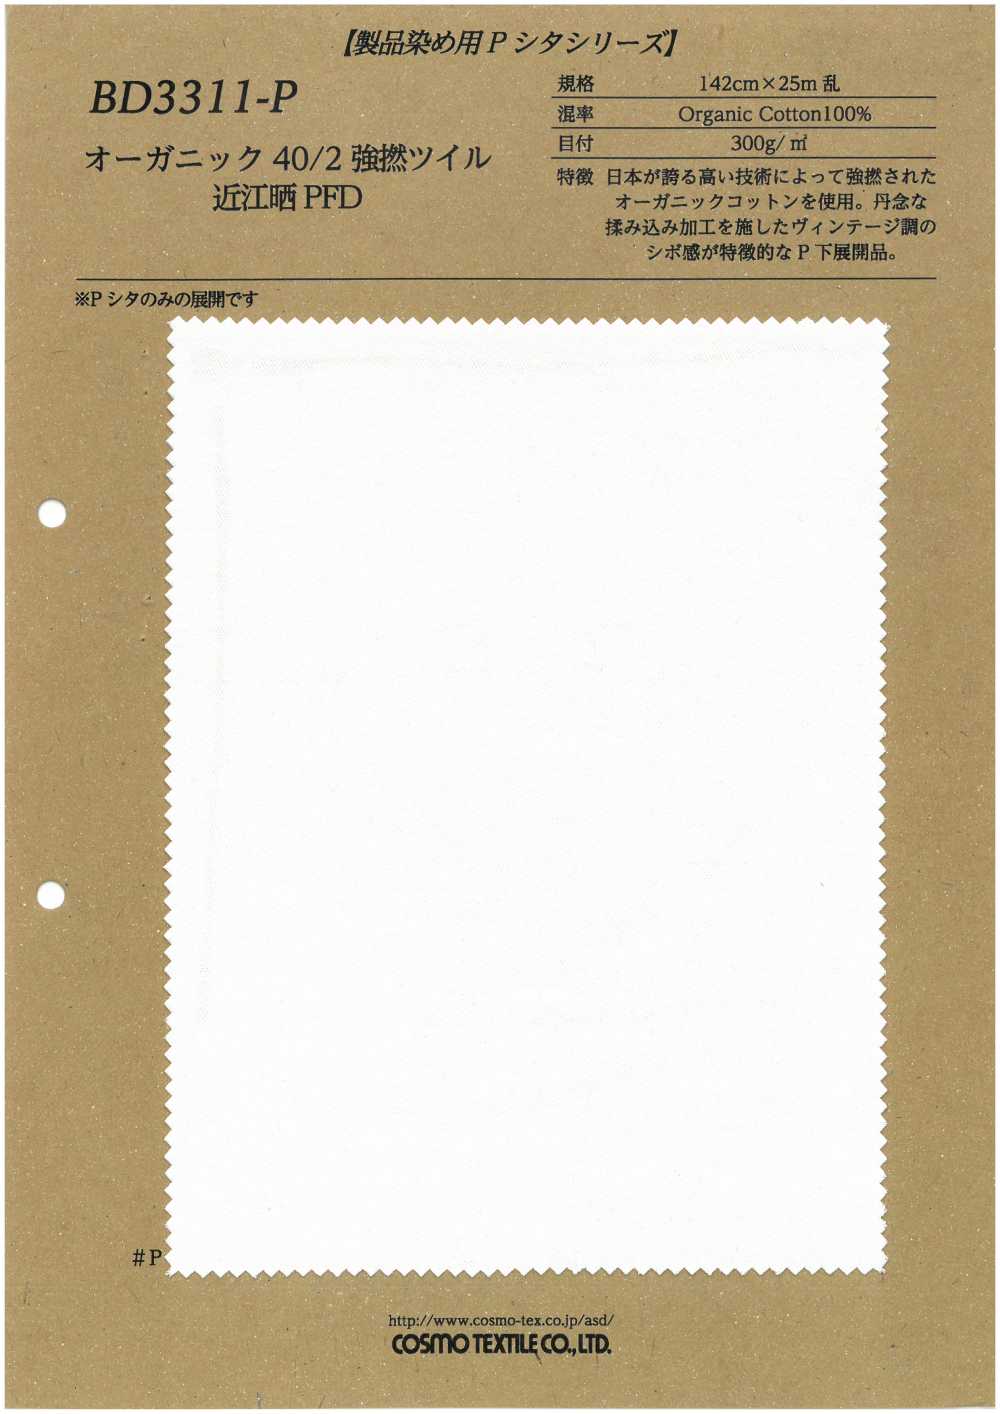 BD3311-P 有机 40/2 强捻斜纹Omi 漂白 PFD[面料] Cosmo Textile 日本